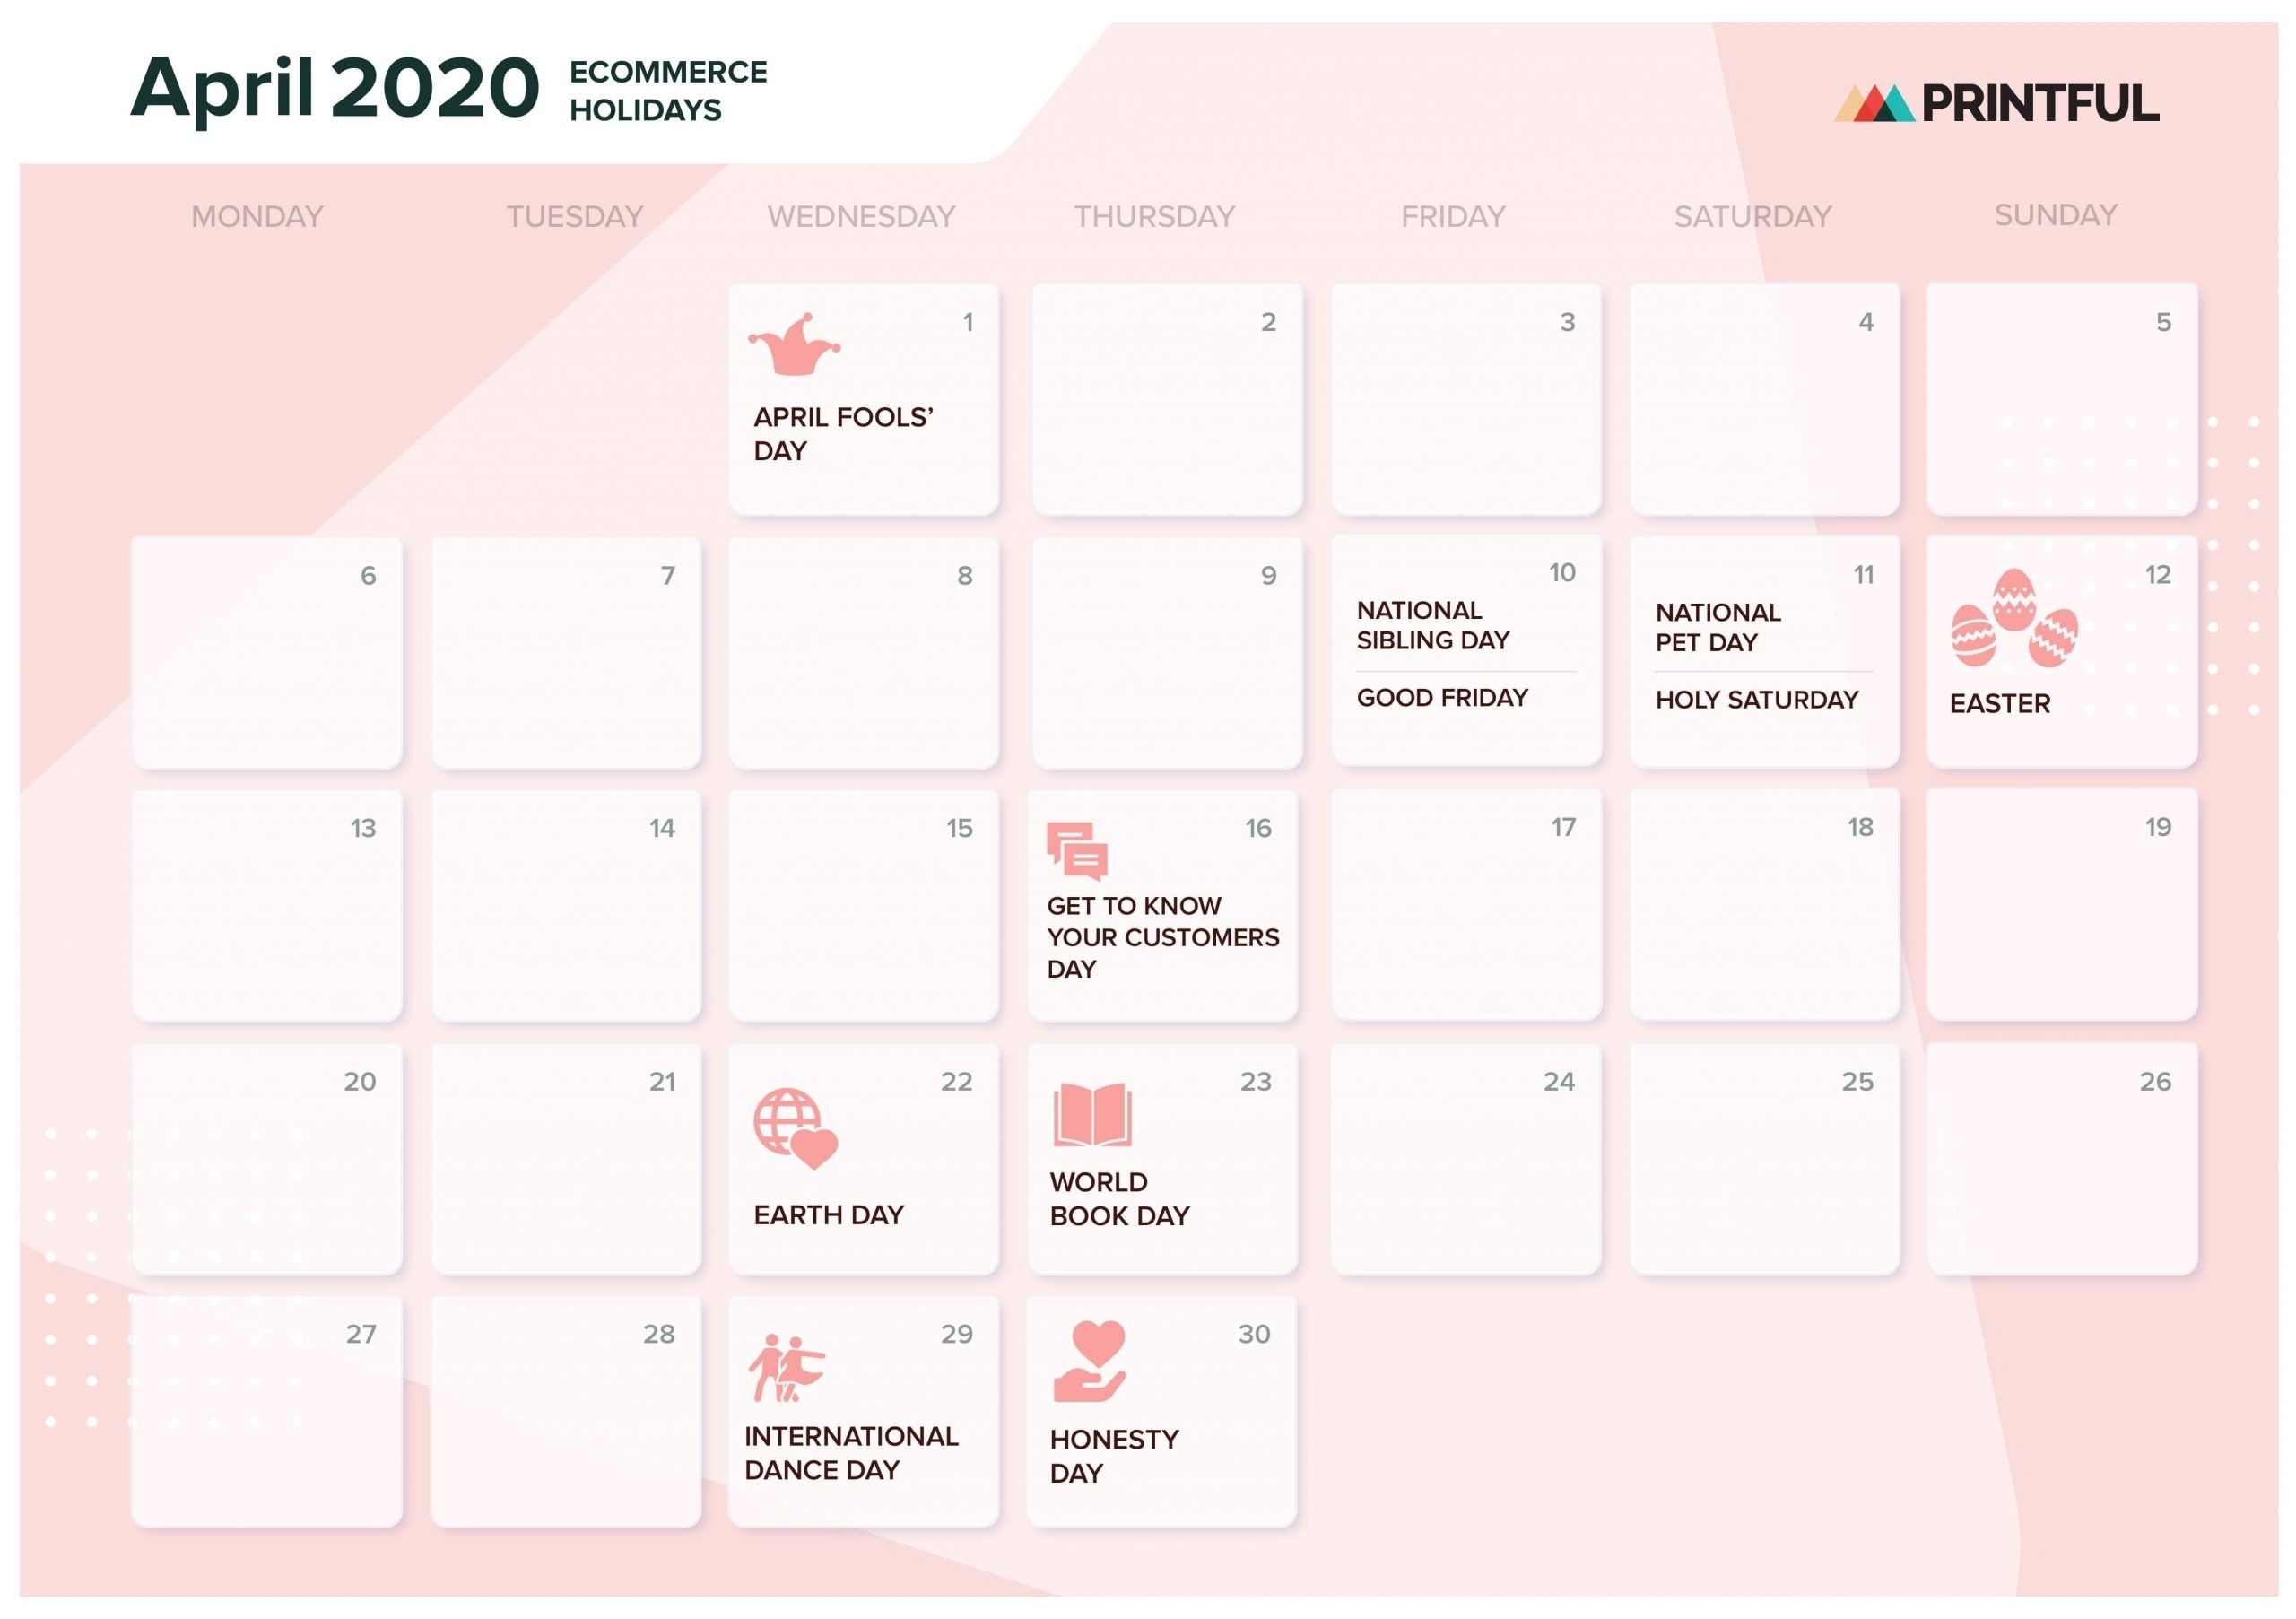 The Ultimate 2020 Ecommerce Holiday Marketing Calendar-Hallmark Calendar Holidays 2020